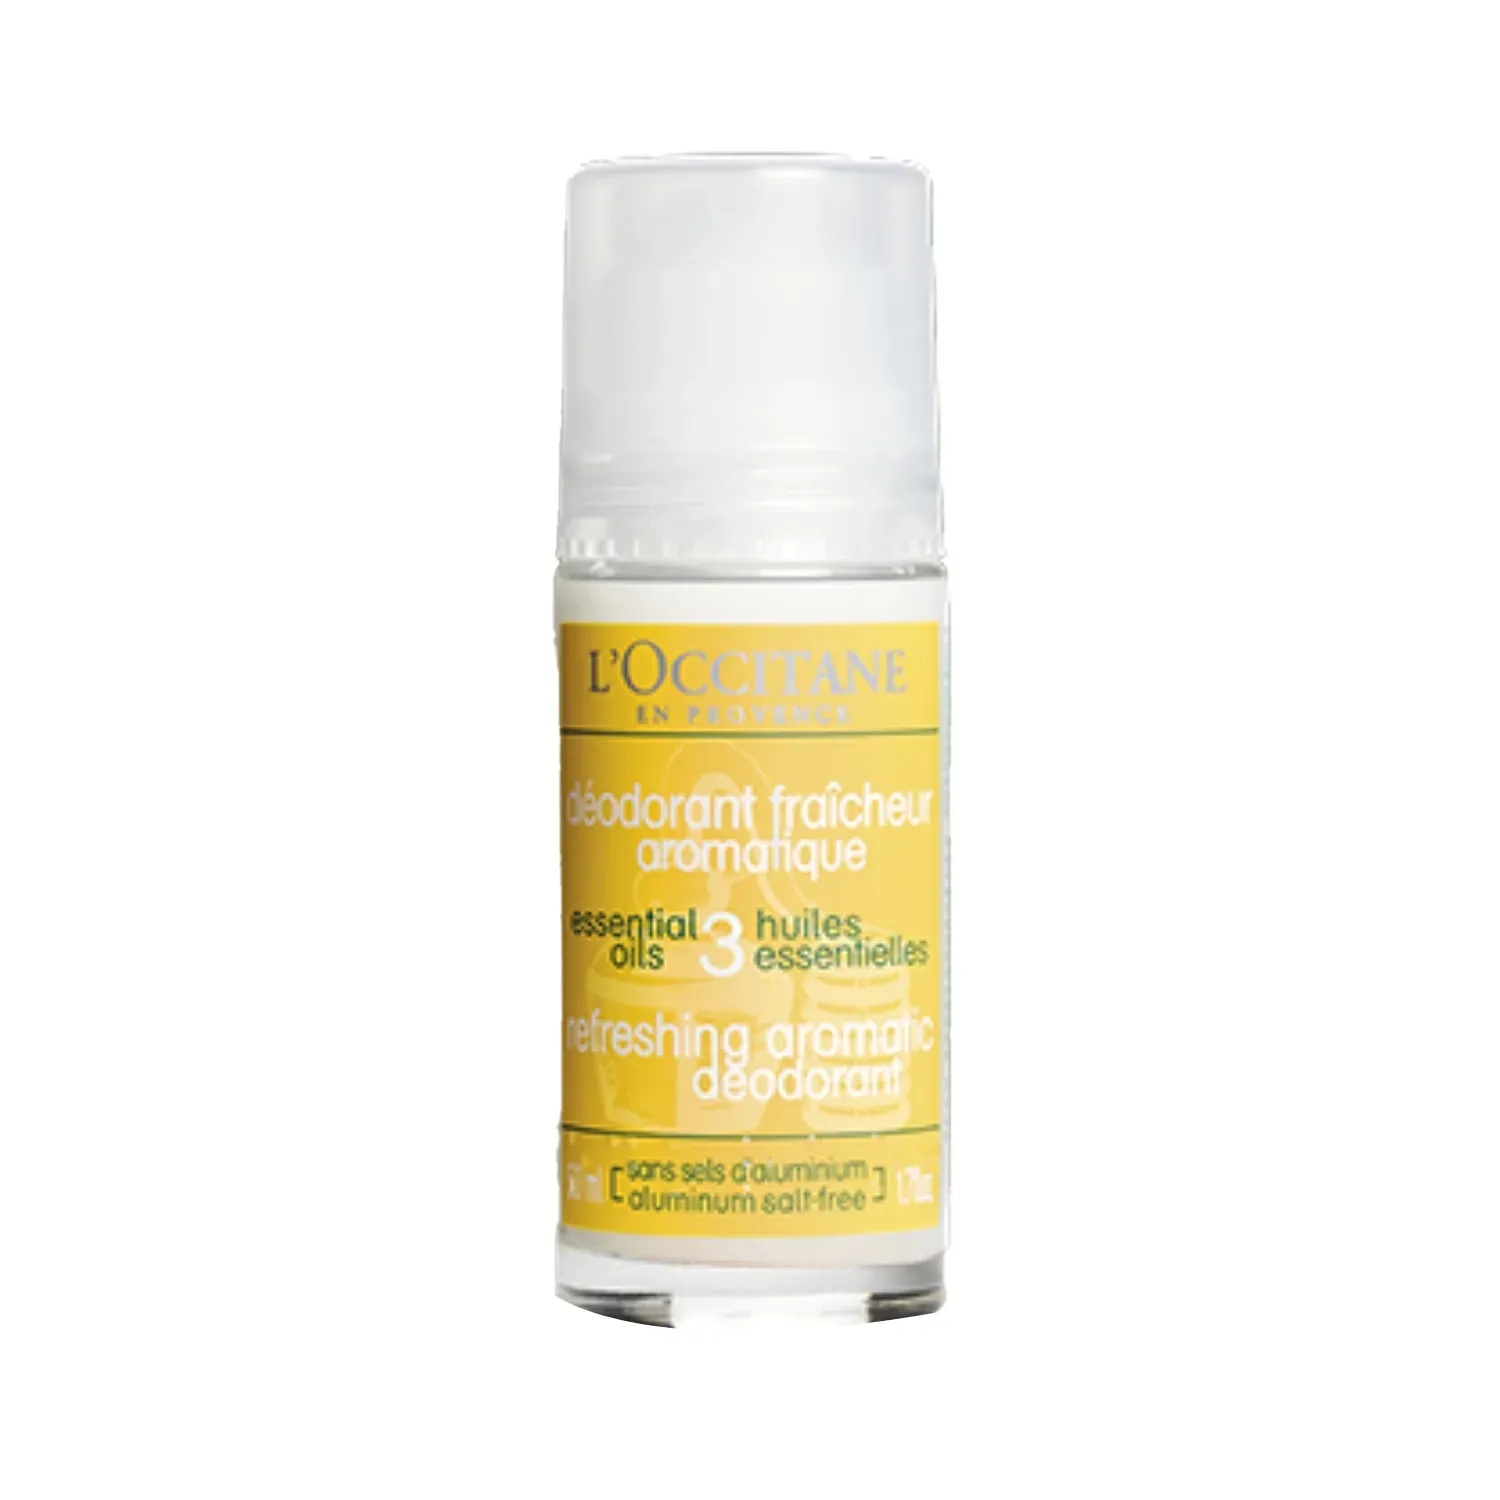 L'occitane | L'occitane Refreshing Aromatic Deodorant - (50ml)